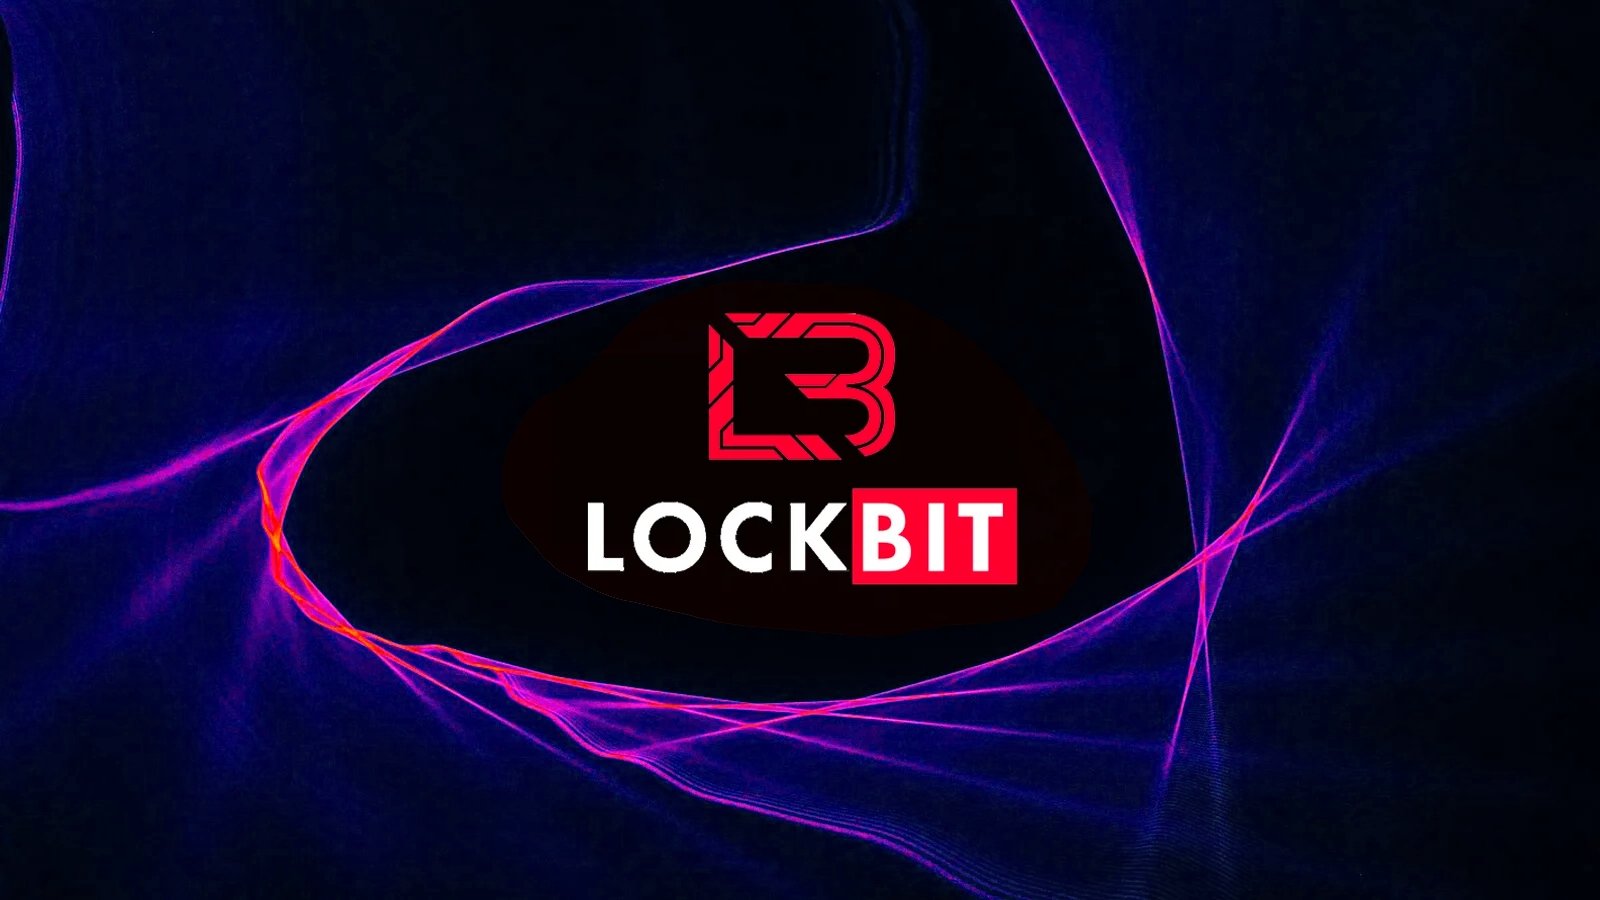 LockBit 勒索软件团伙声称对皇家邮政发起网络攻击